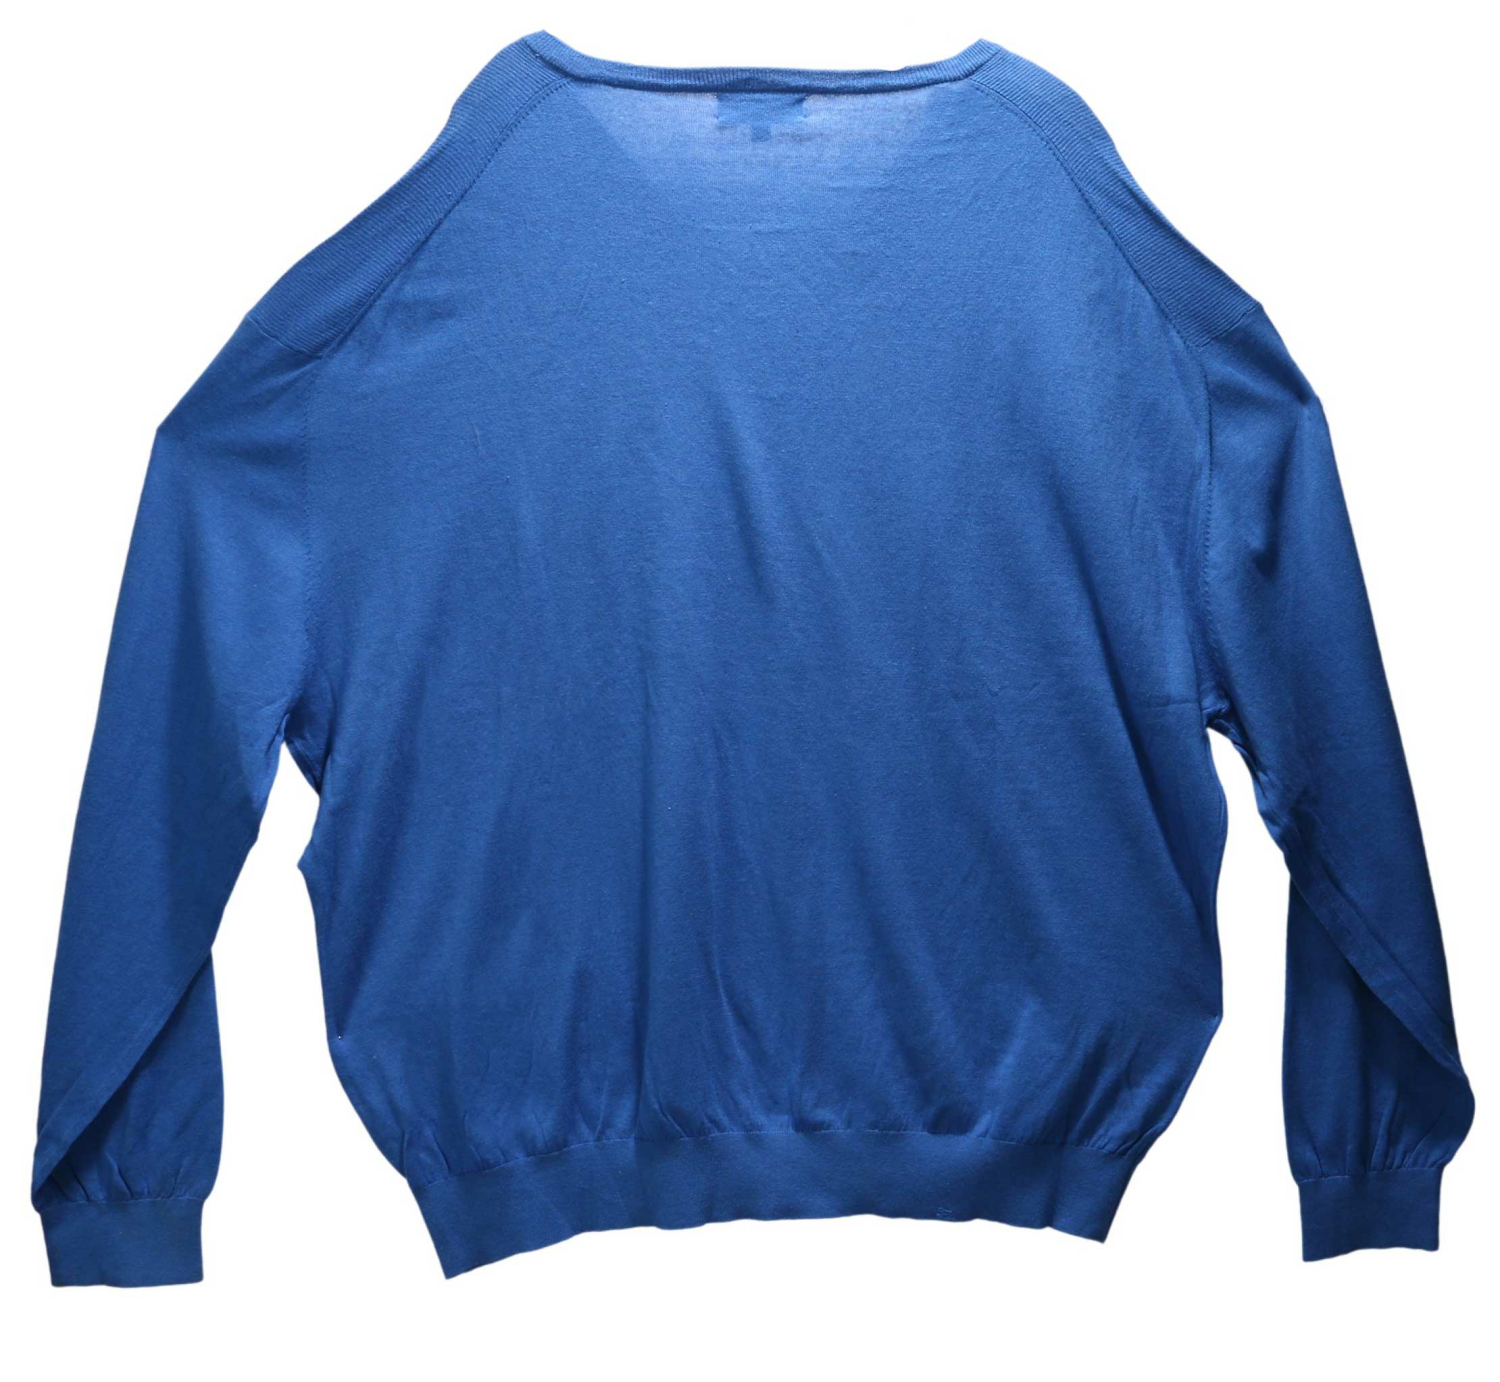 Aqua Toscano Men's V-Neck Pullover Sweater | eBay